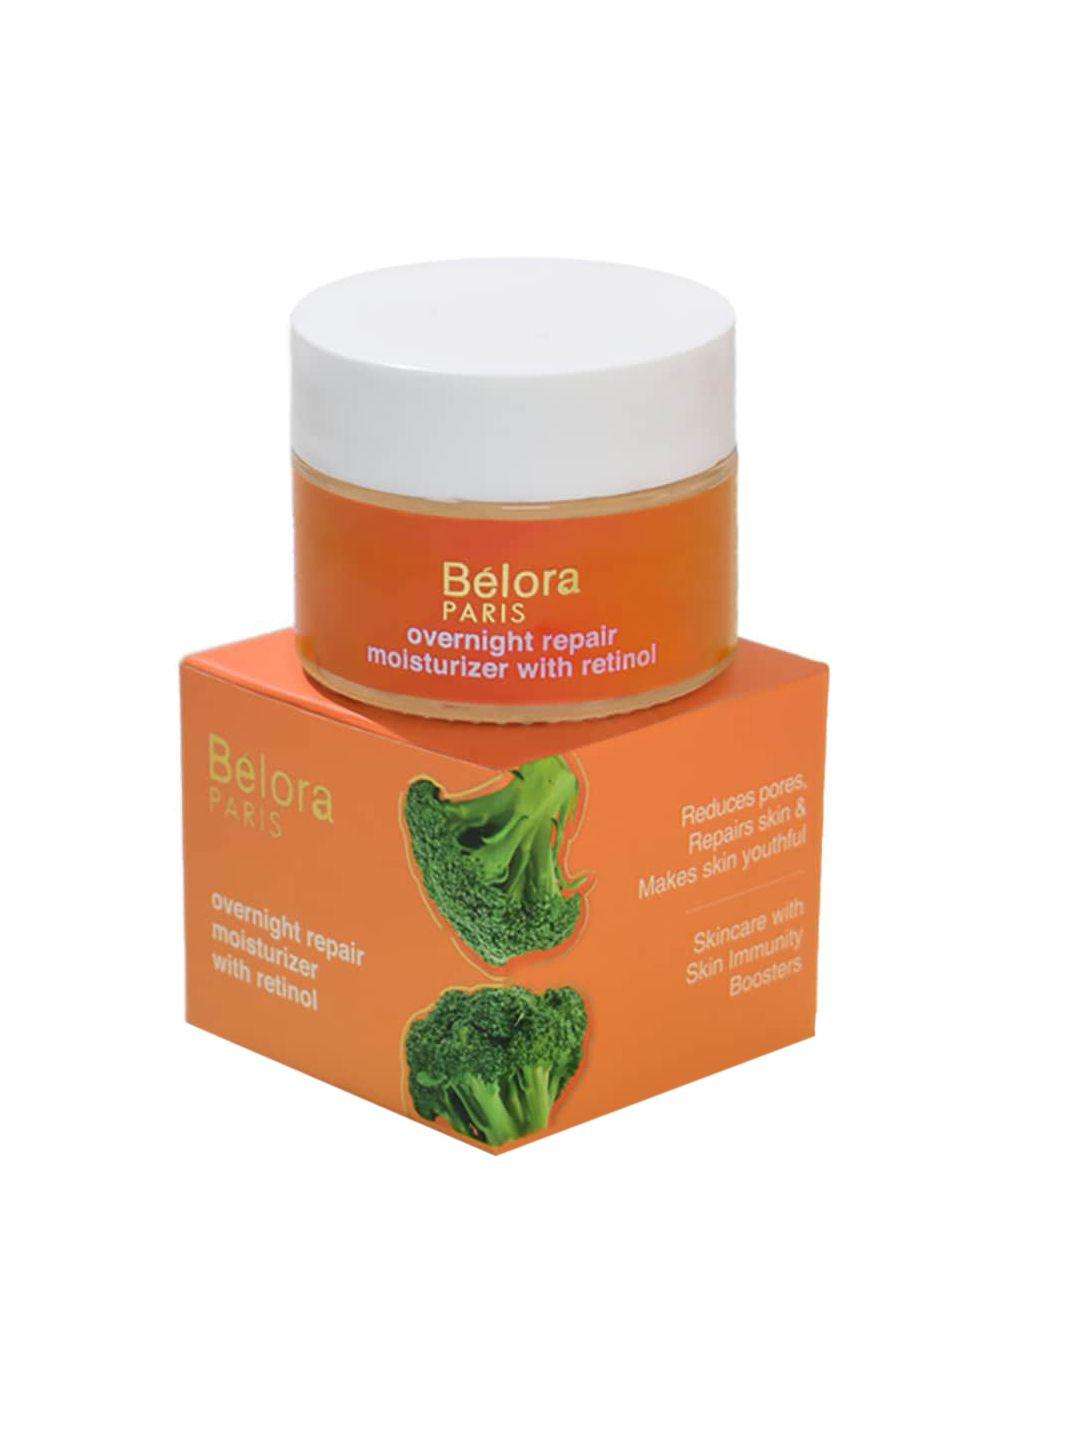 belora paris overnight repair moisturizer with retinol & vitamin b5 for youthful skin-50ml